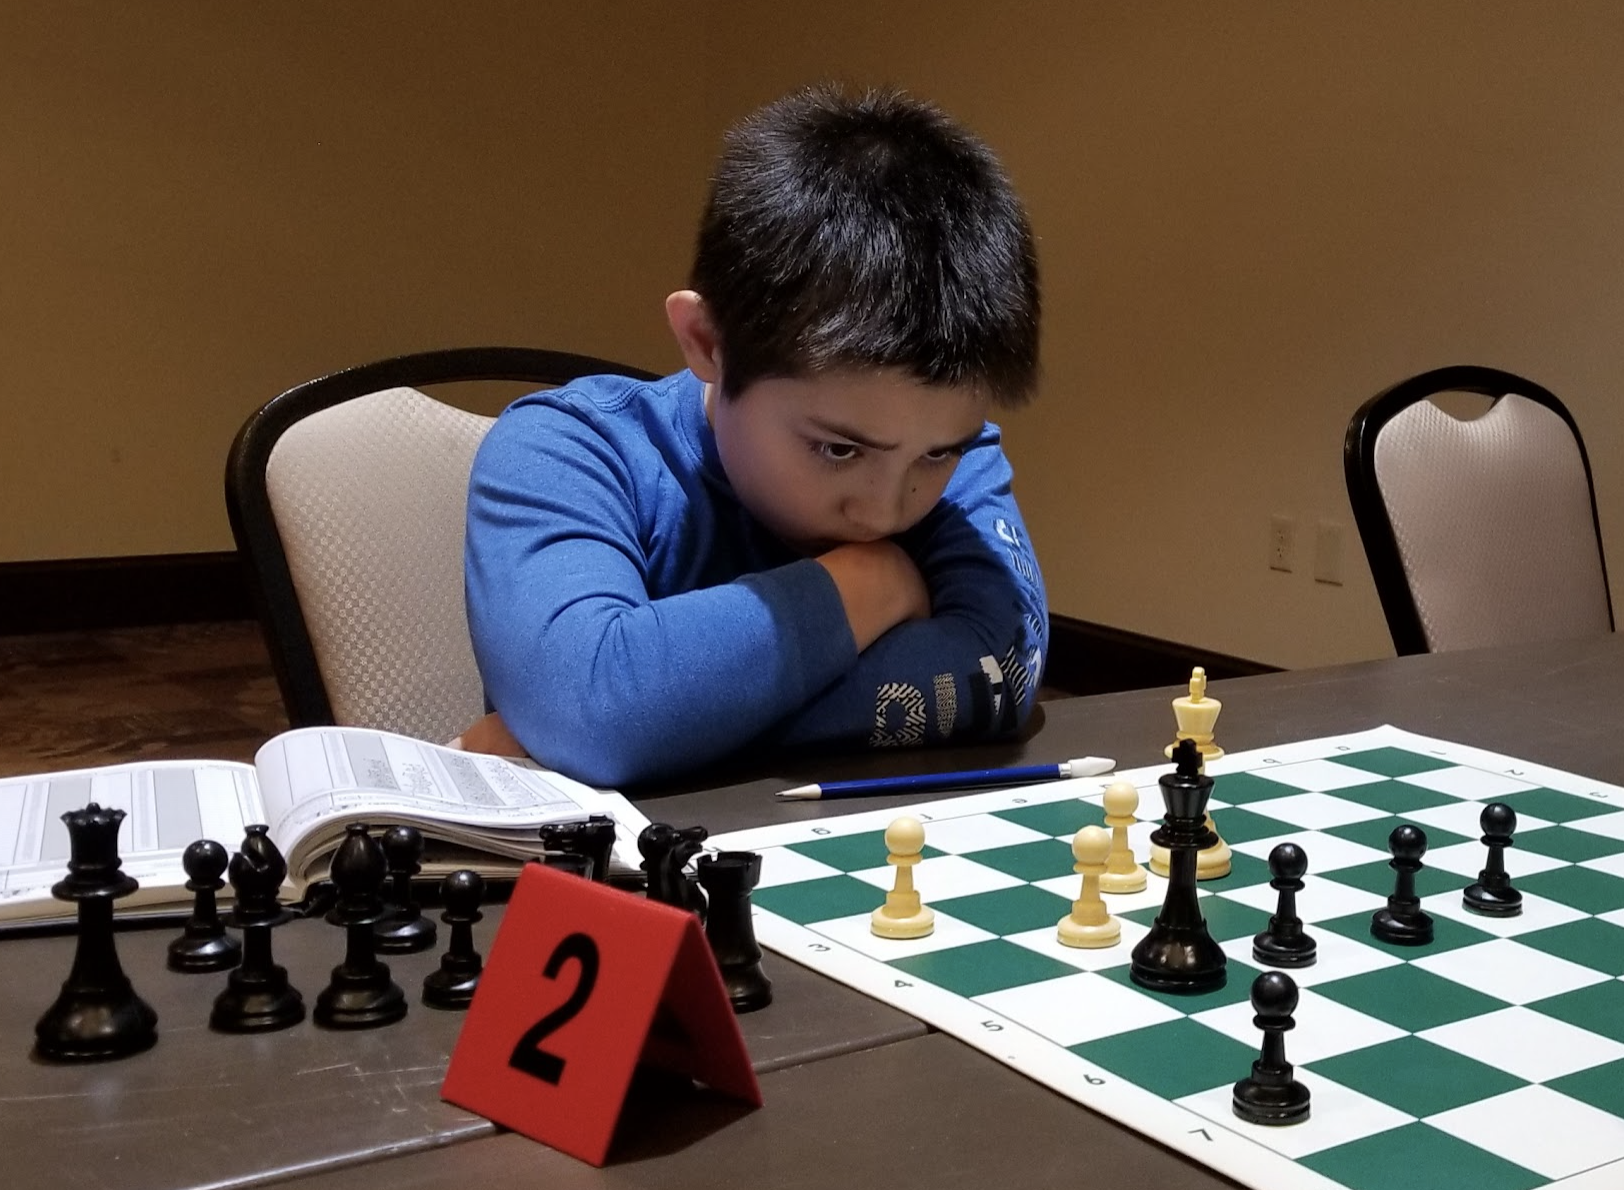 Ohio state chess championships set for I-X Center 